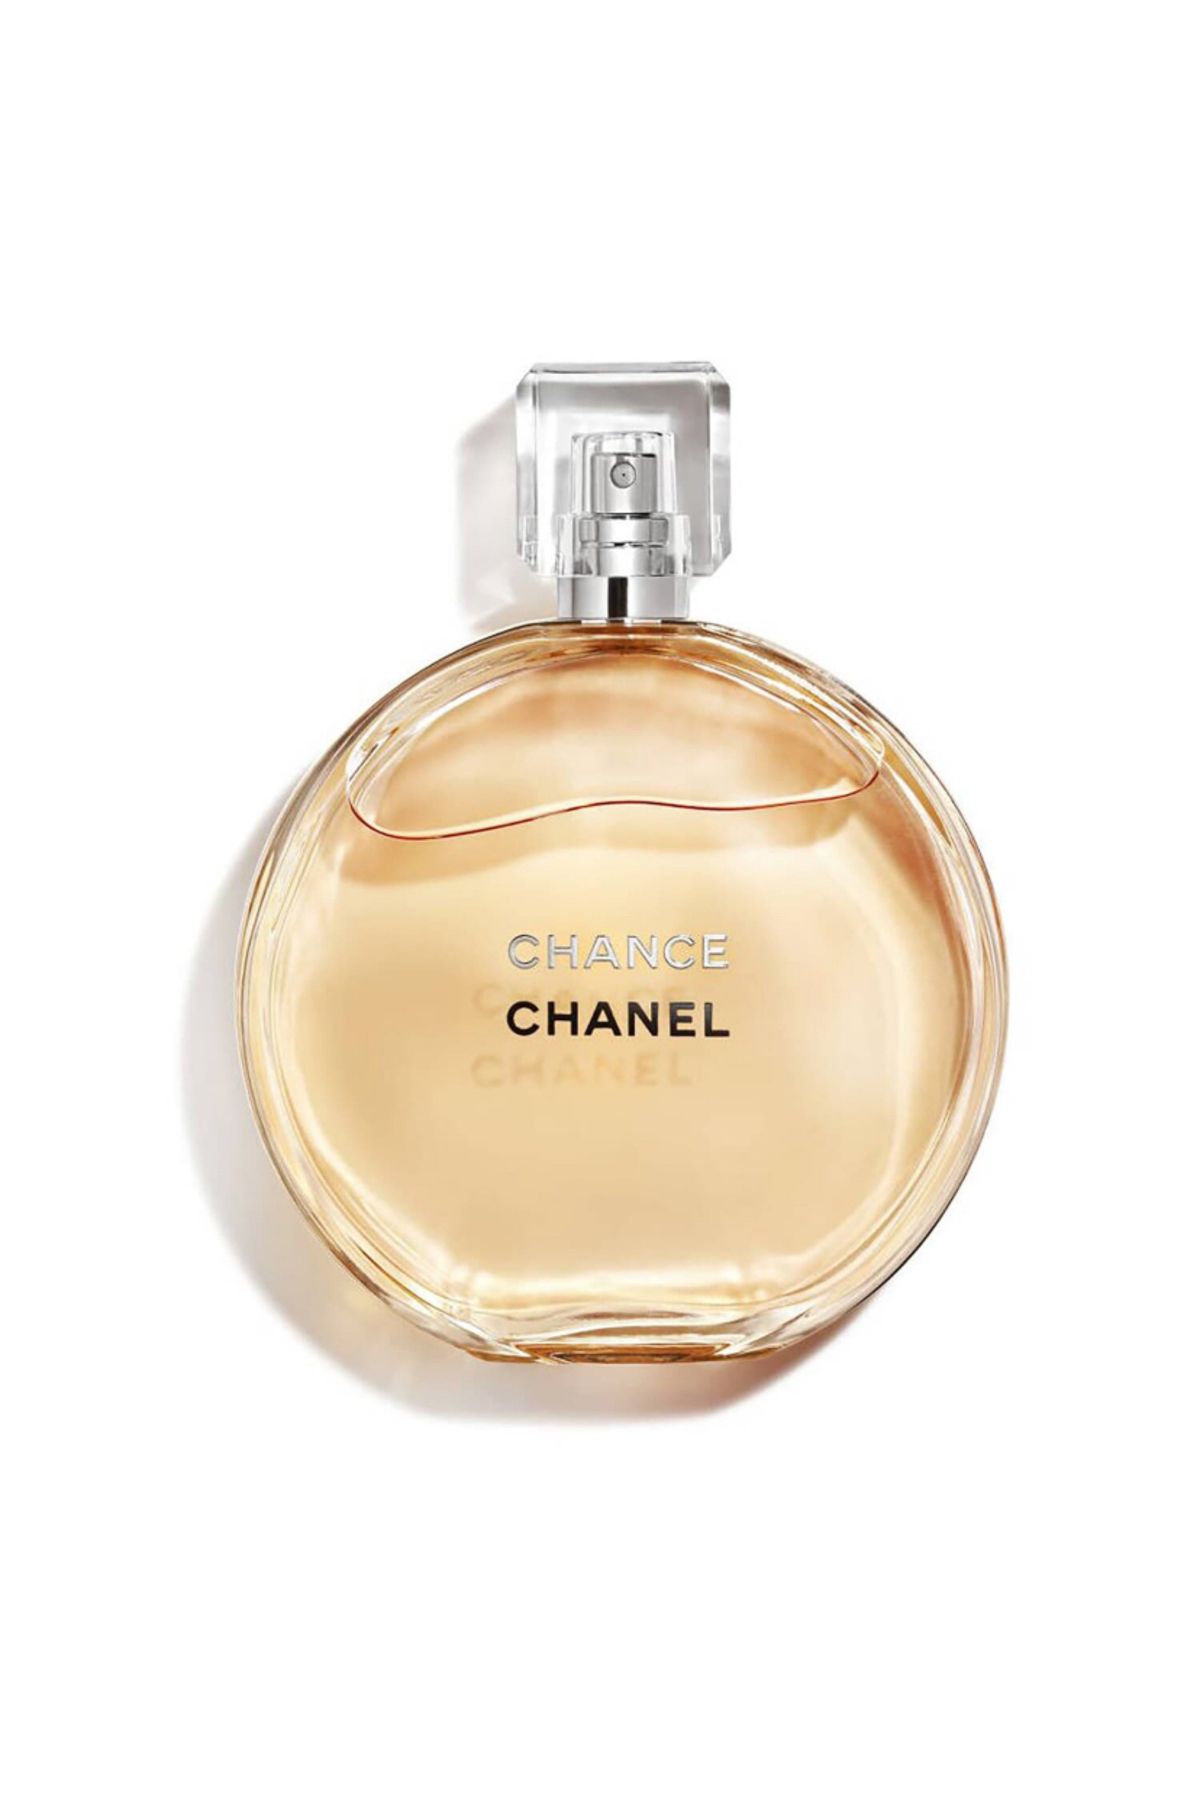 Chanel CHANCE EDT KADIN PARFUM 150ml Pinkestcosmetics